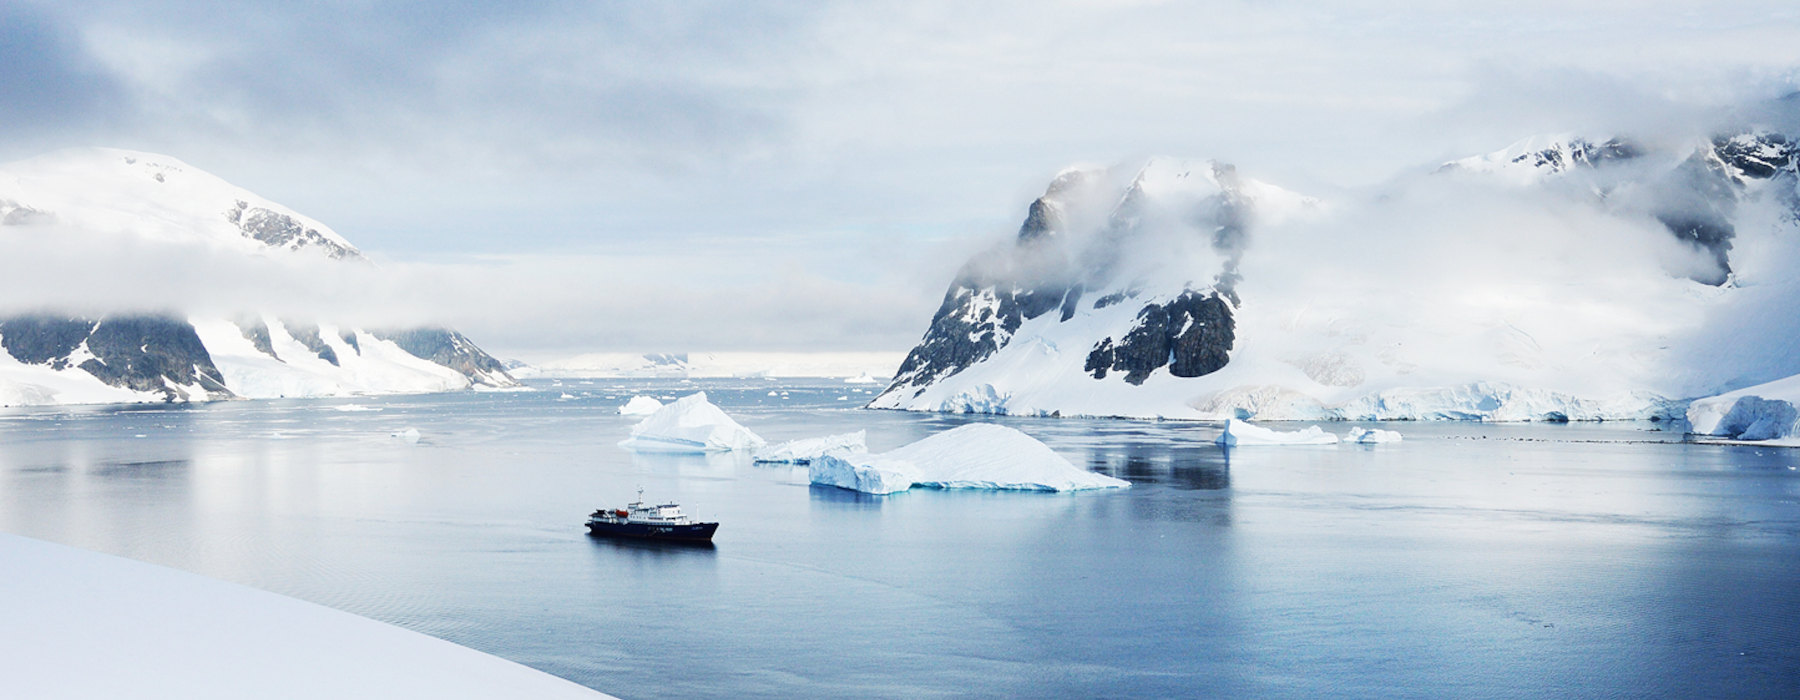 Antarctica<br class="hidden-md hidden-lg" /> Luxury Adventure Holidays